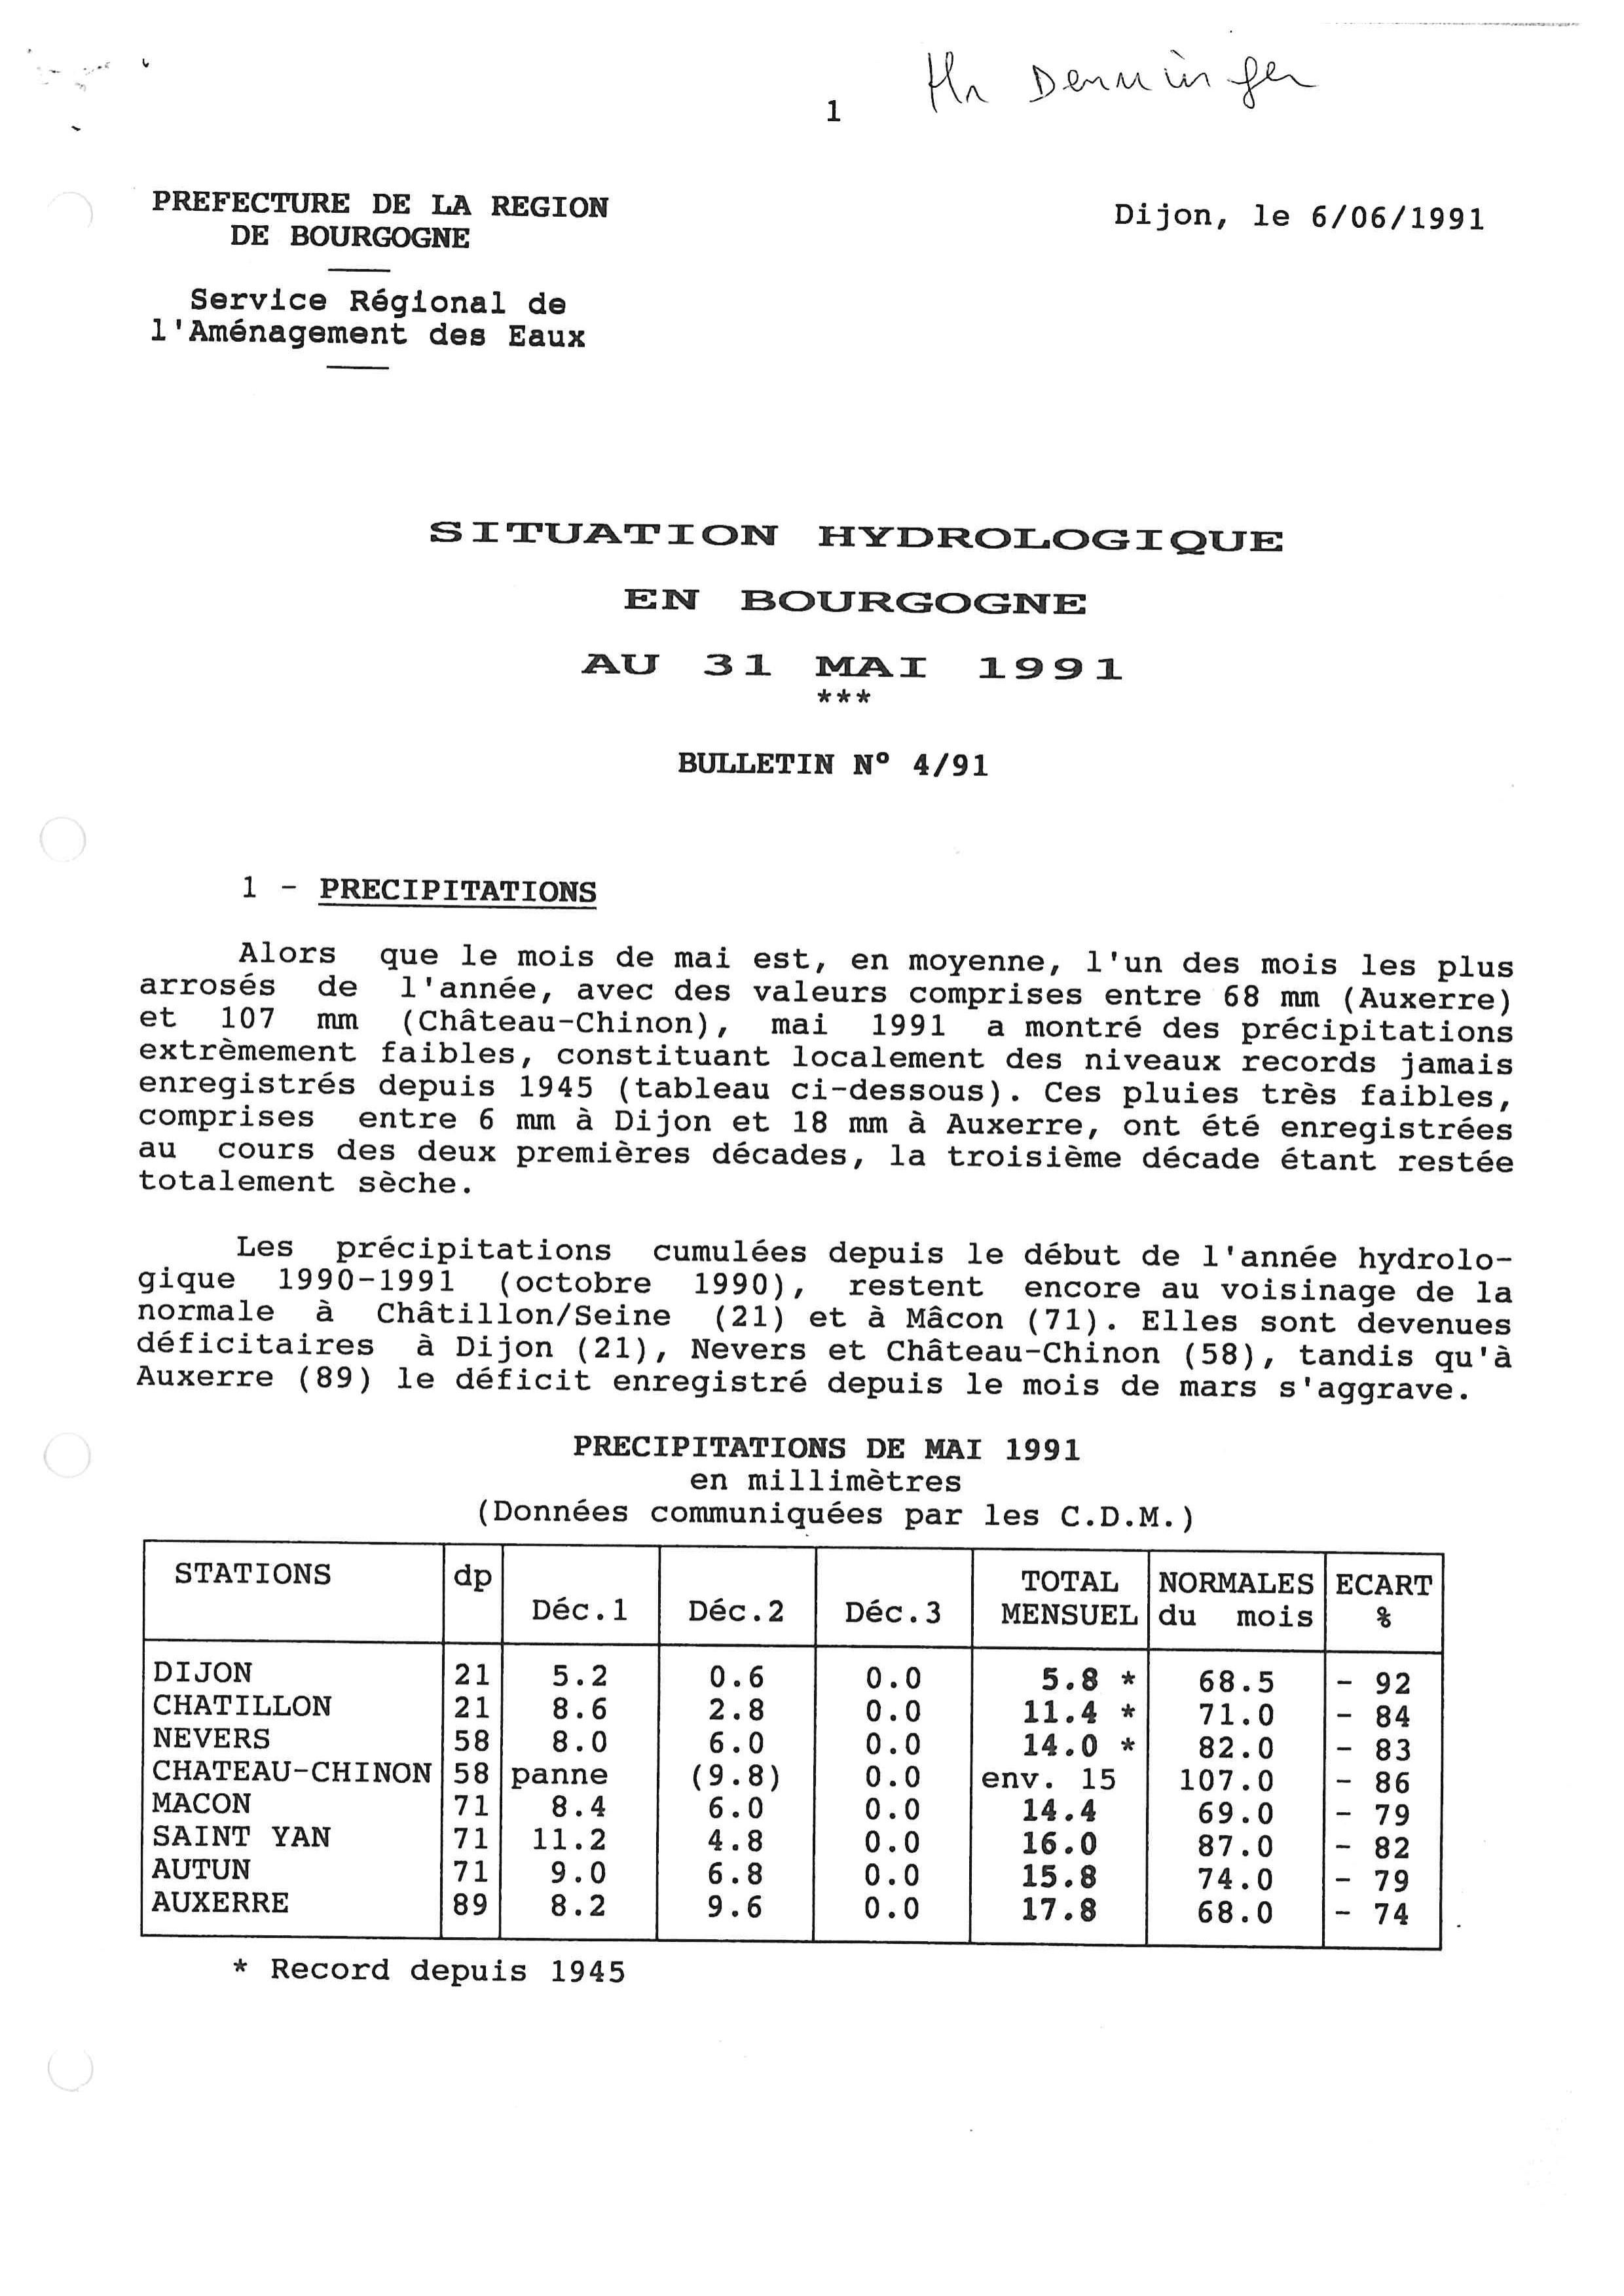 Bulletin hydrologique du mois de mai 1991